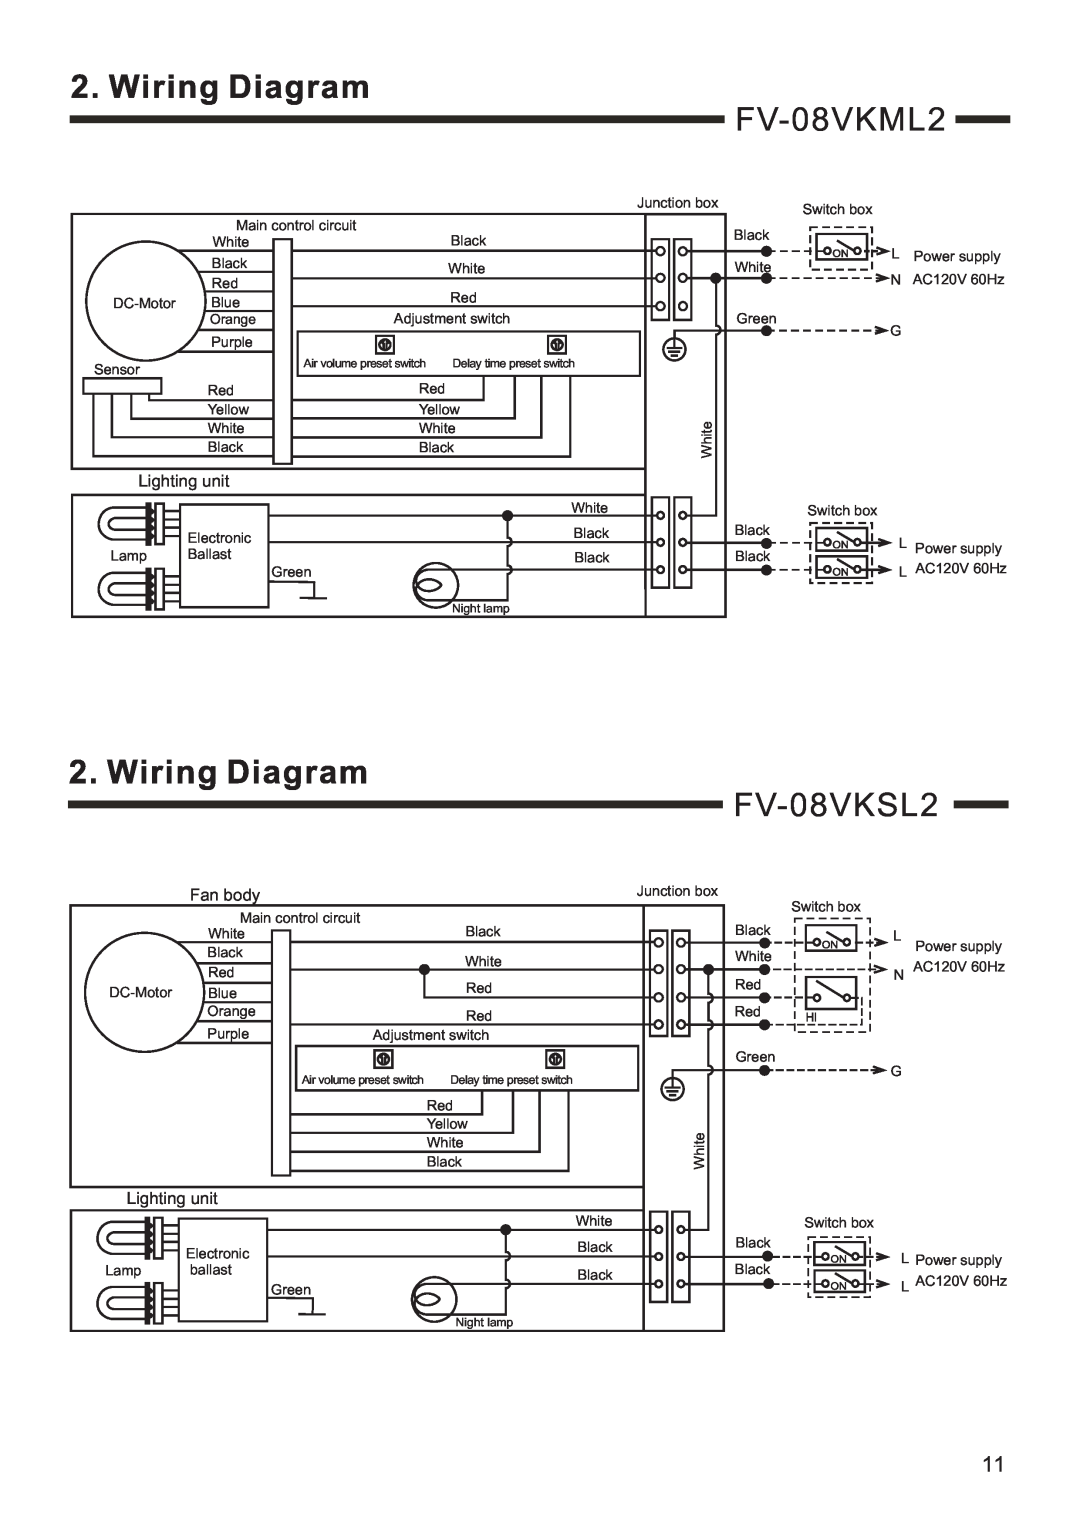 Panasonic FV-08VKSL2 service manual FV-08VKML2, Lighting unit, Fan body 